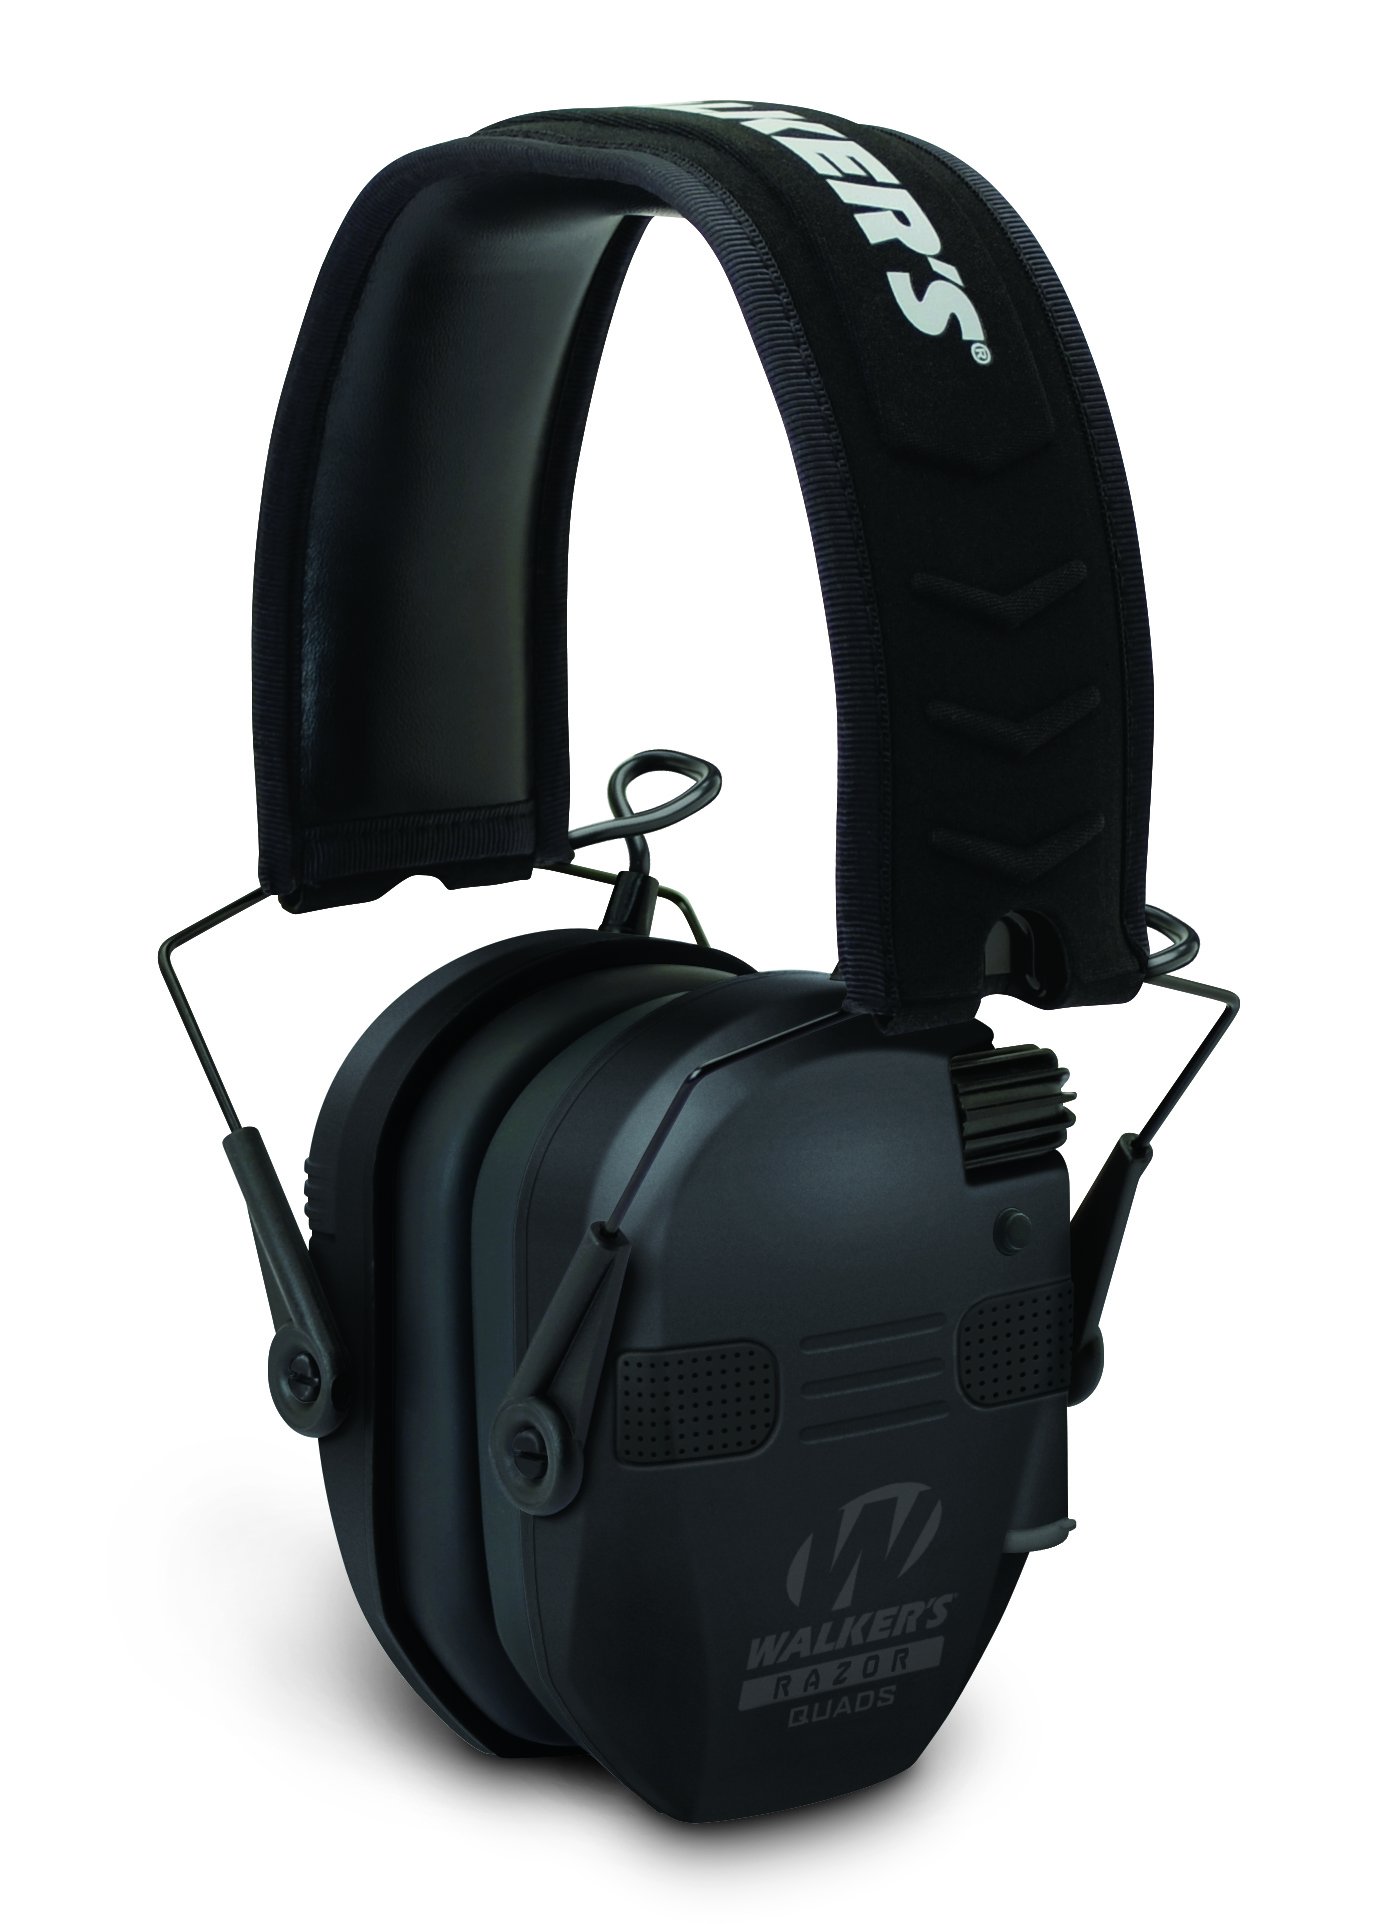 Walker's Razor Quad 电子耳罩 - 4 个麦克风 360 度声音捕捉